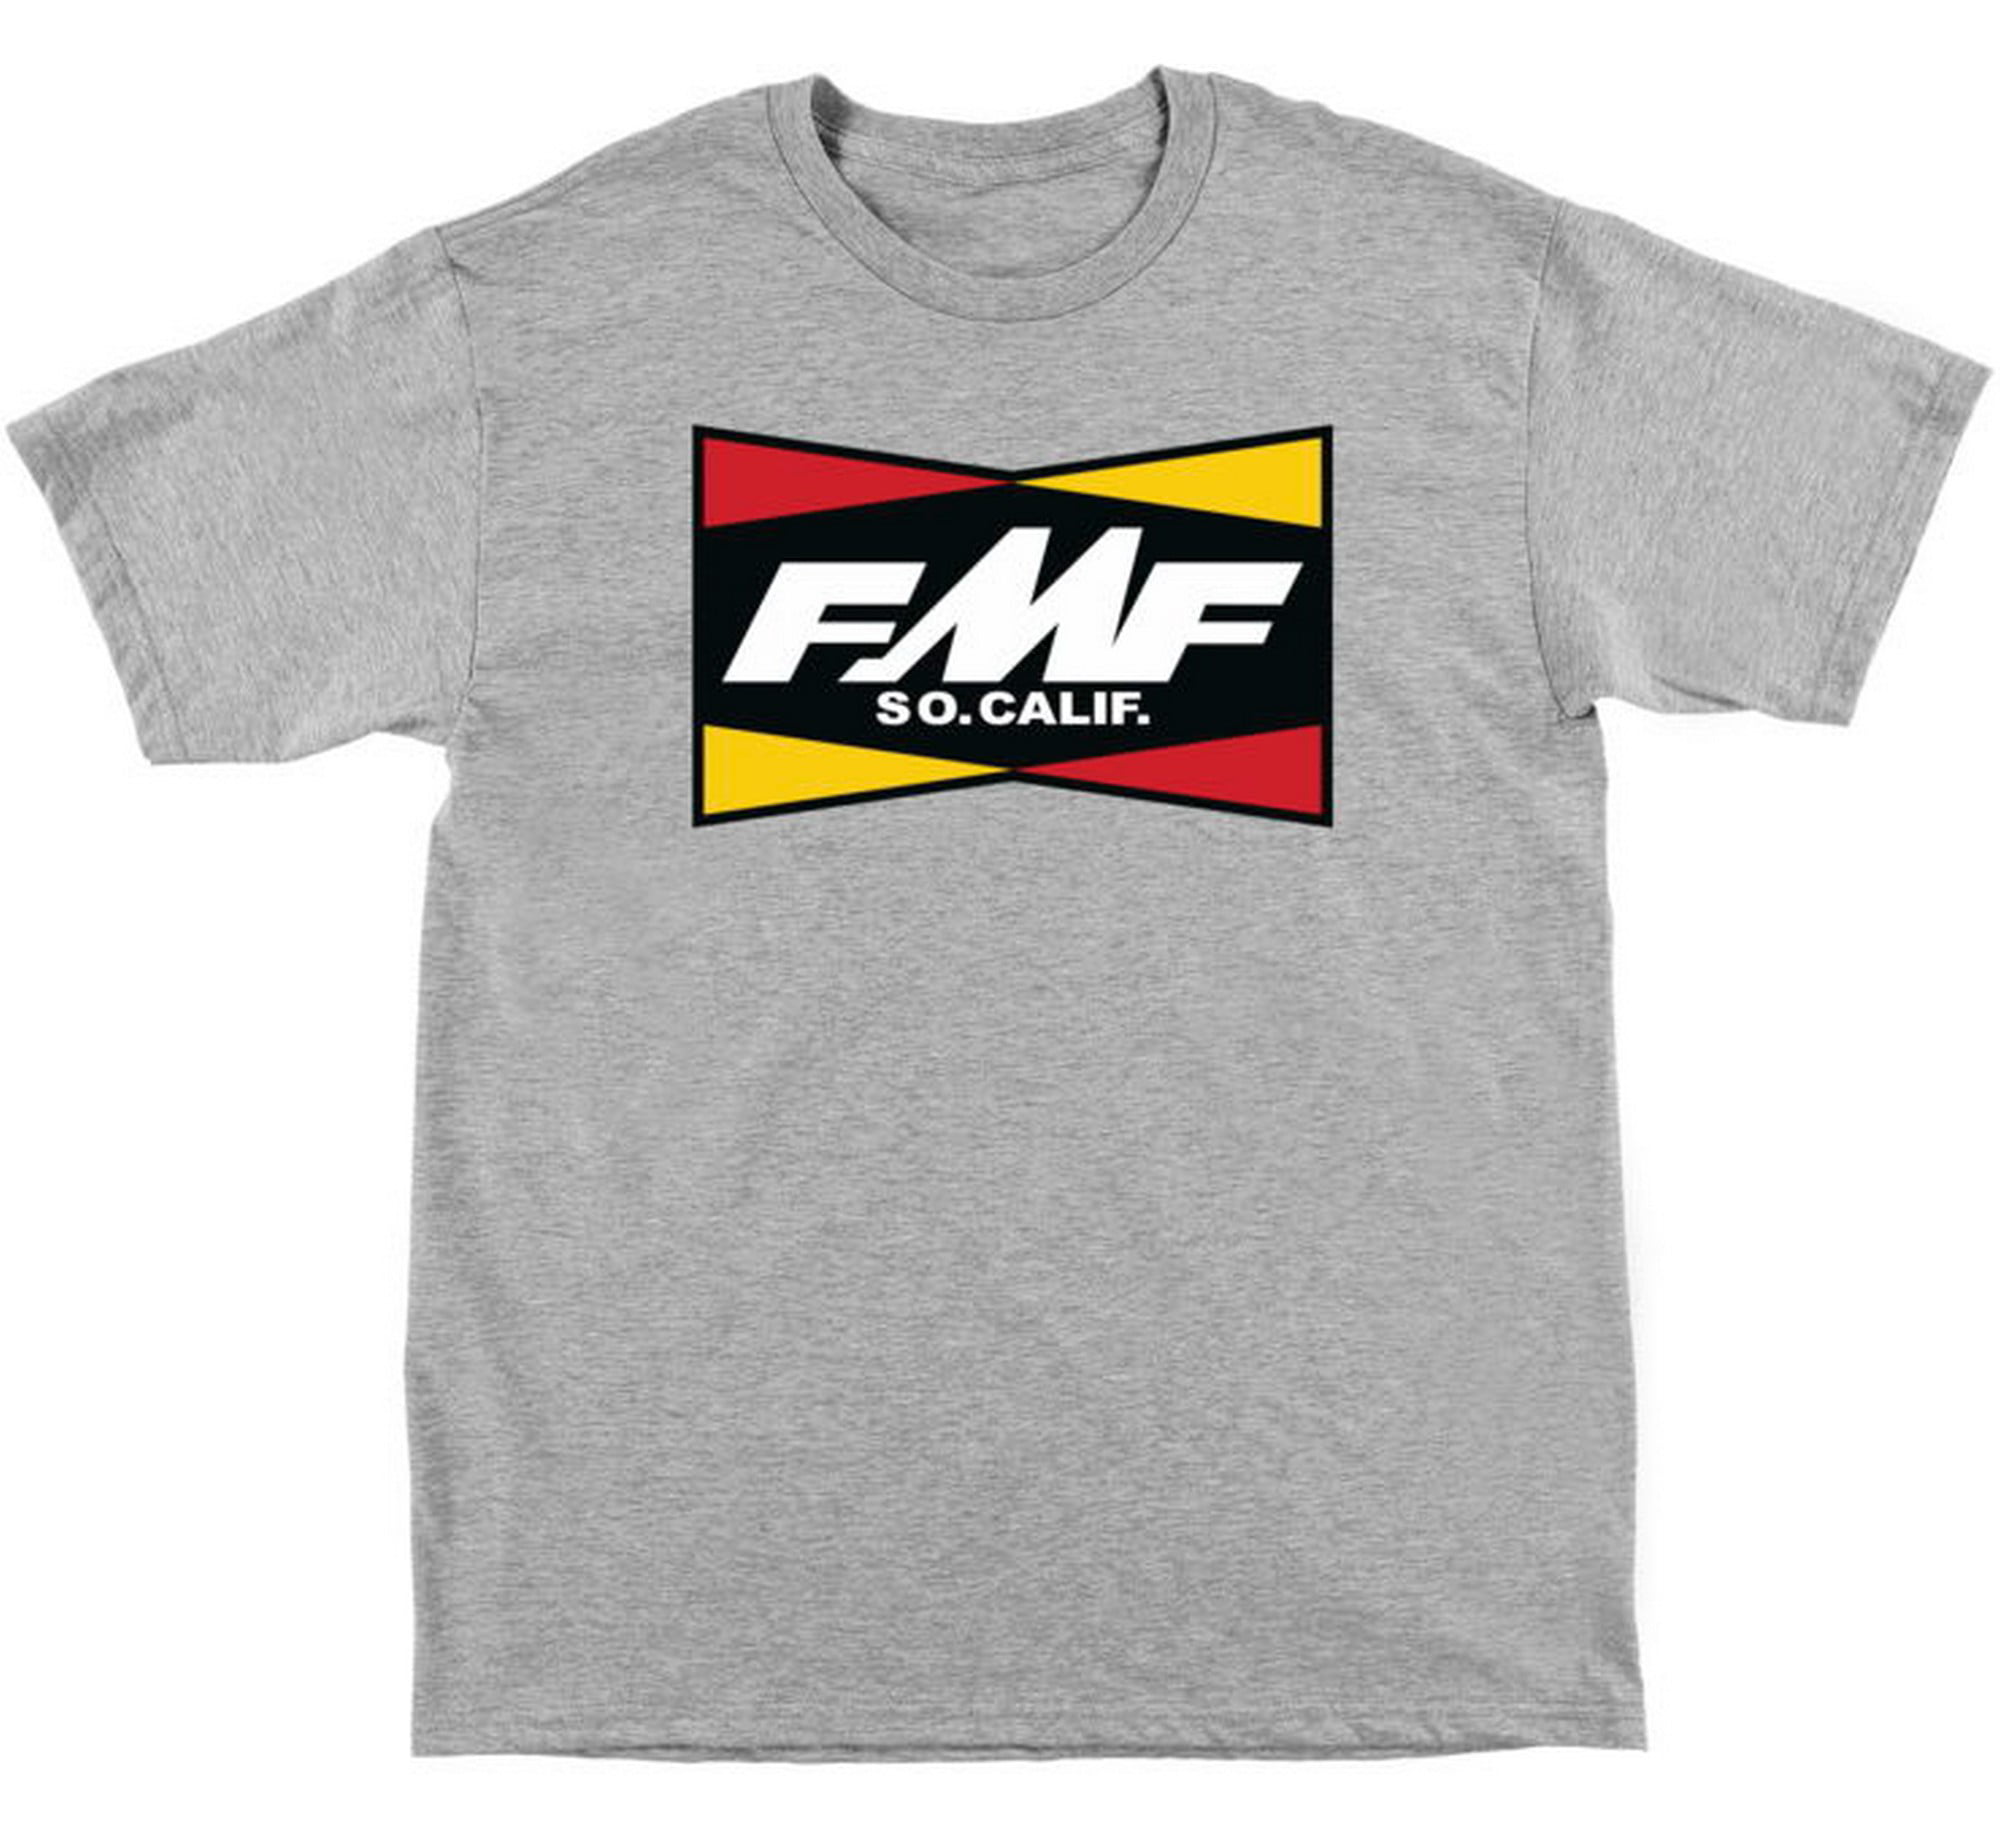 FMF - FMF Legit Mens Short Sleeve T-Shirt Gray - Walmart.com - Walmart.com